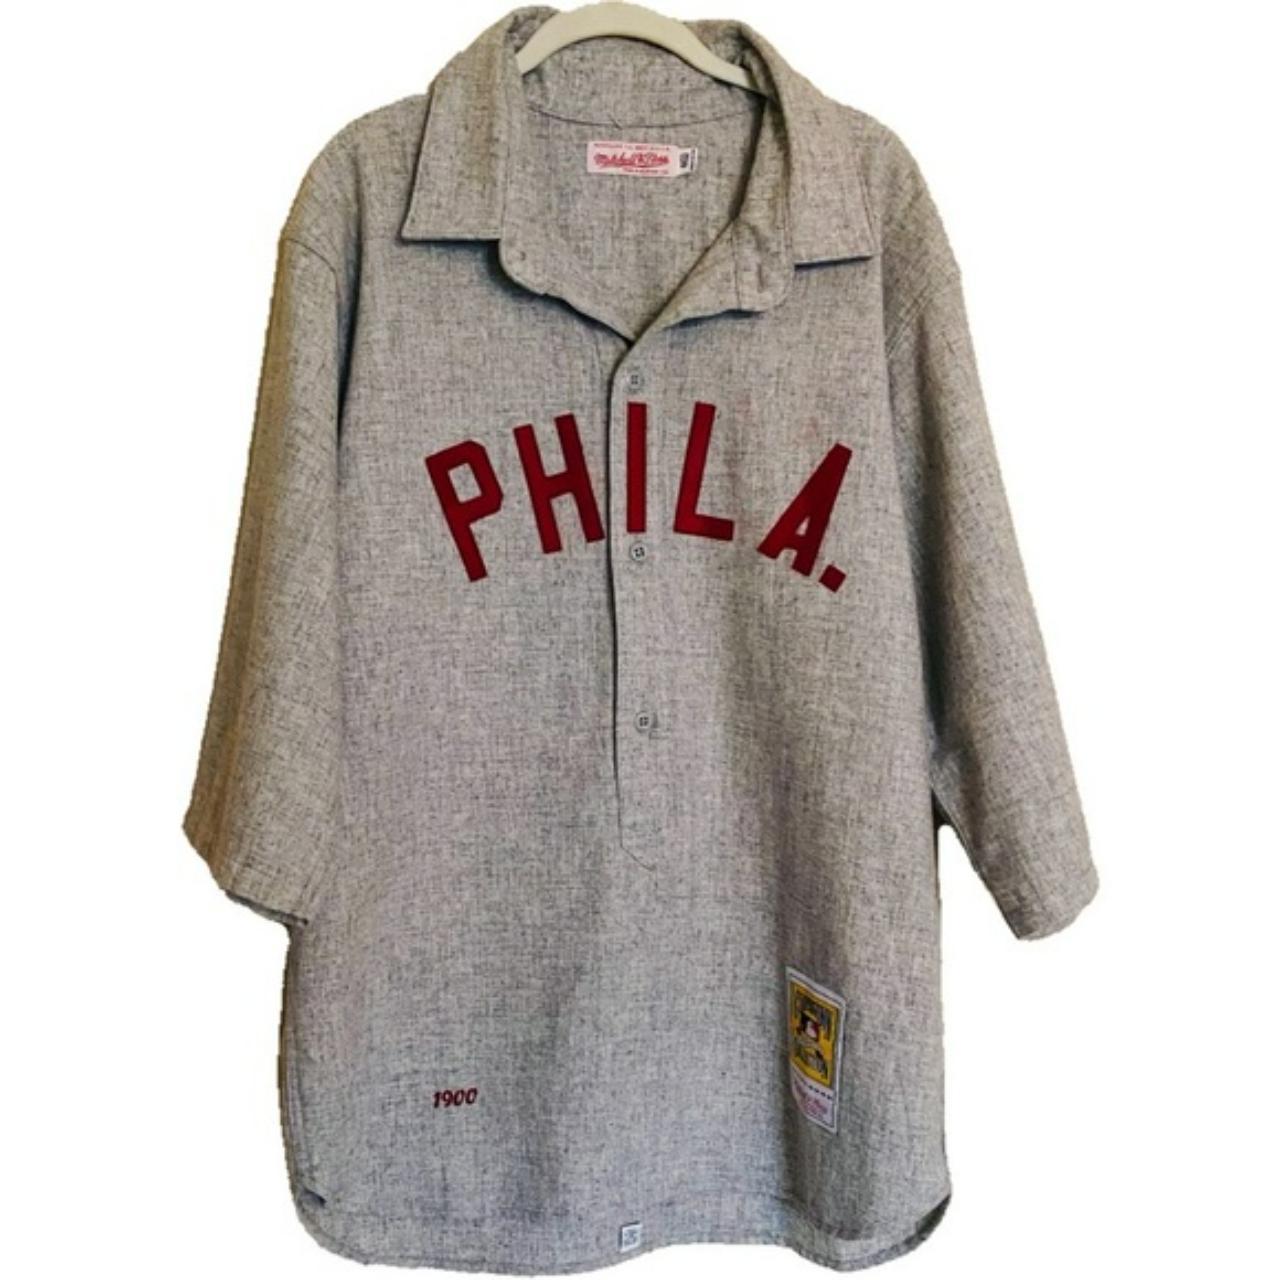 Mitchell & Ness Branded Wool Baseball Jersey (Size L) (VERY RARE)